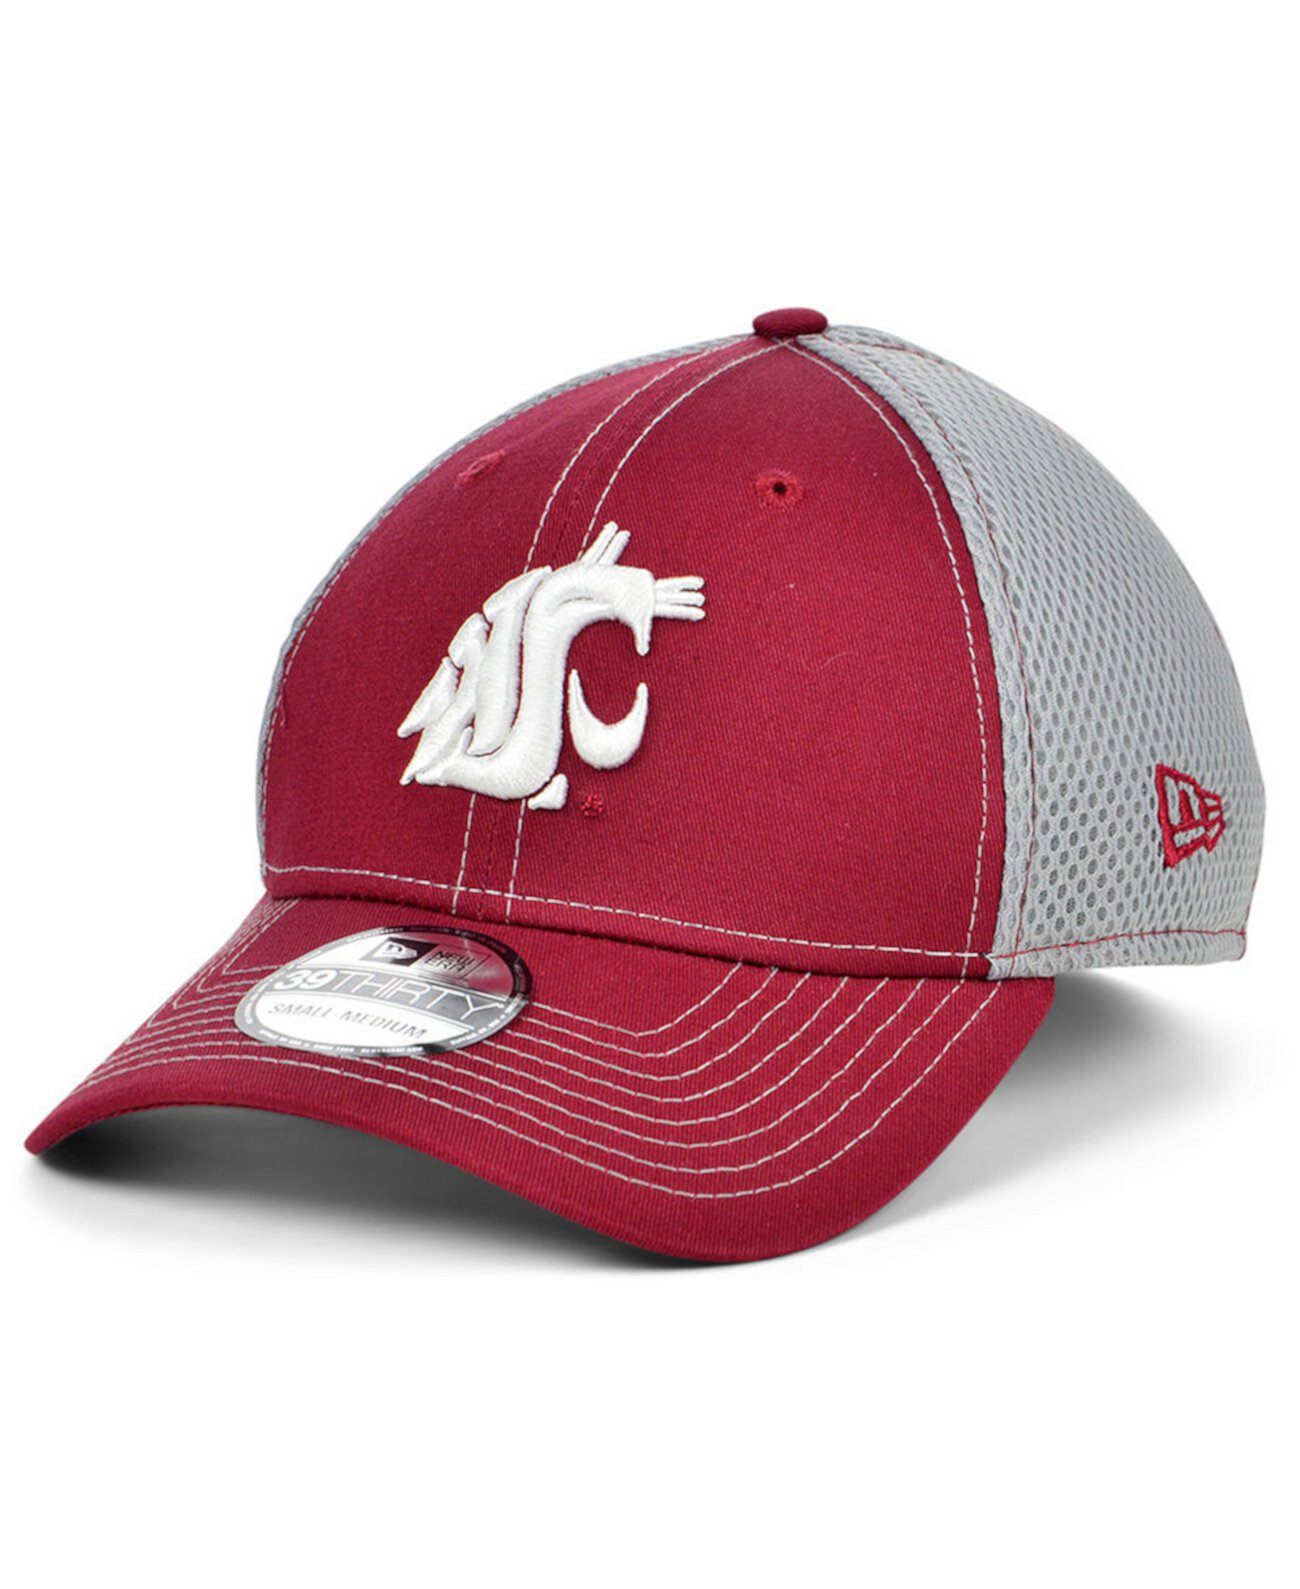 Двухцветная эластичная кепка Washington State Cougars с неоэластичным дизайном New Era